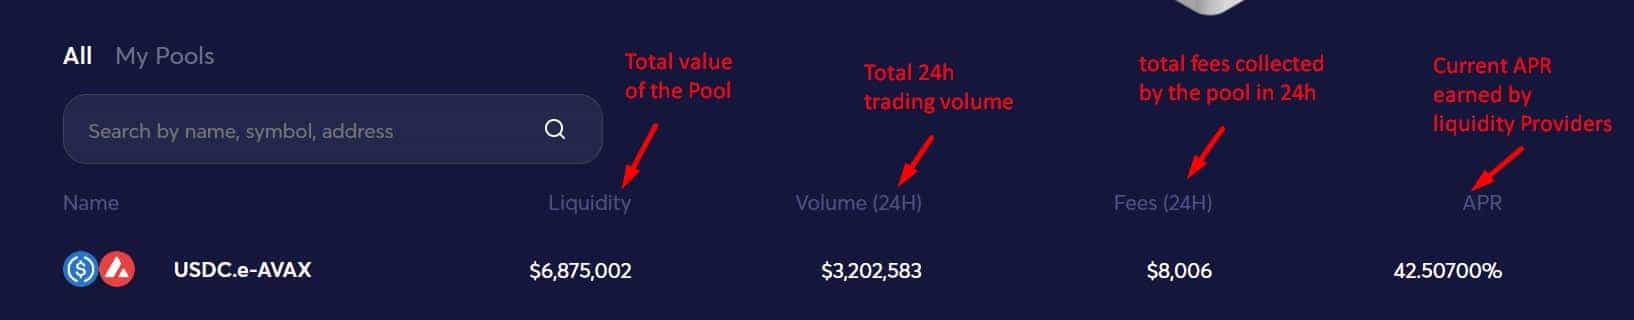 trading pool info